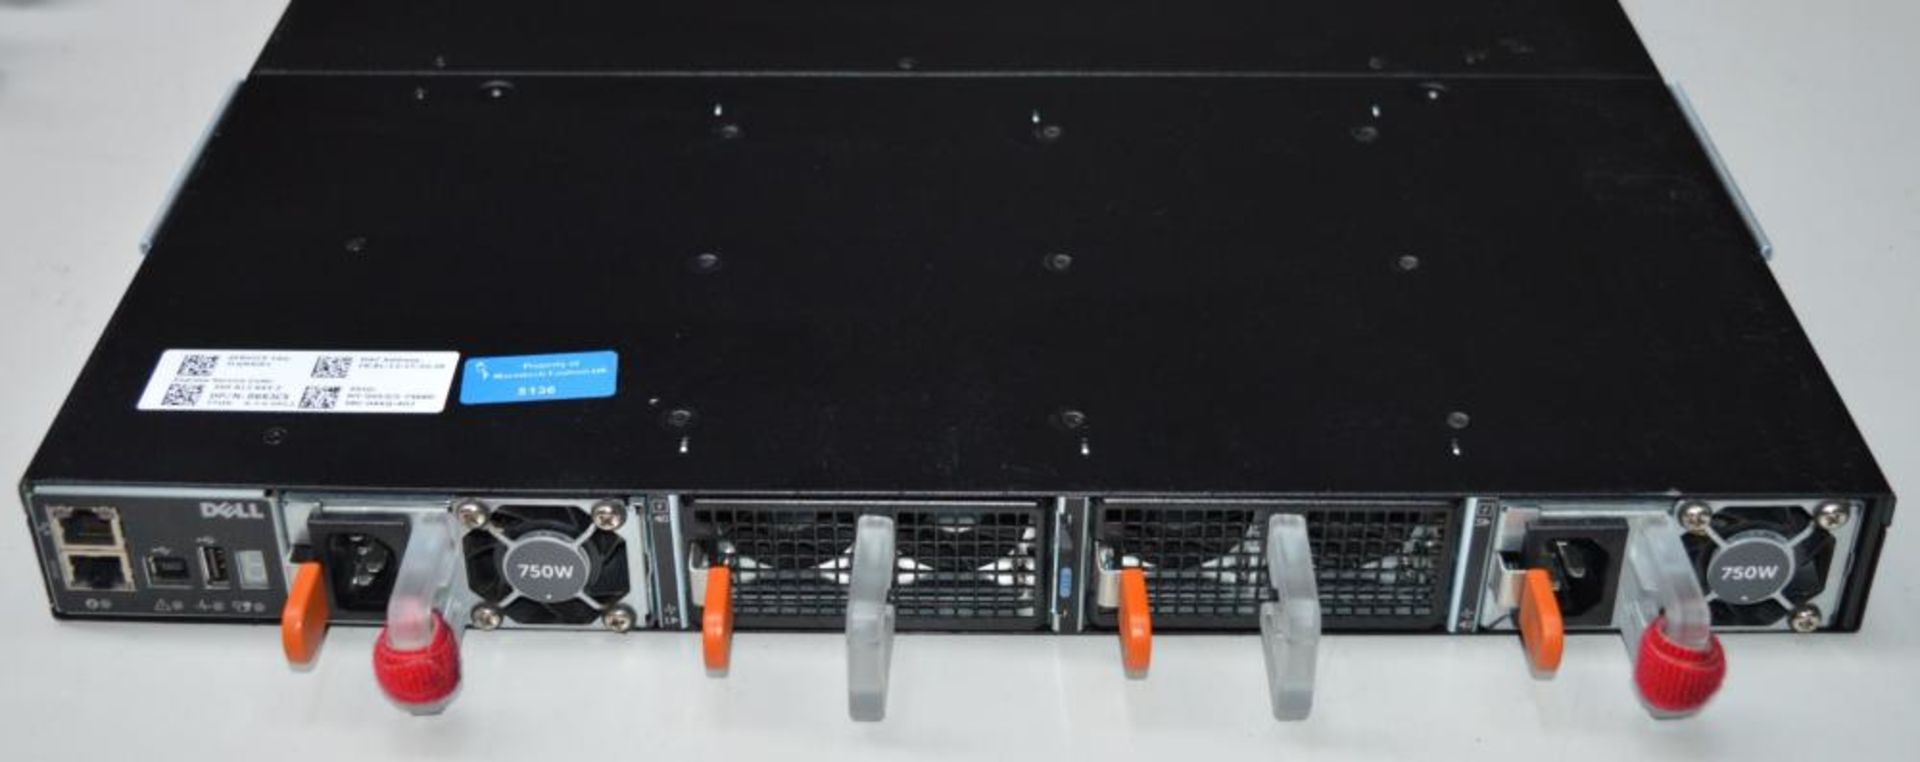 1 x Dell S5000 Modular 1U Storage Switch With 3 x 12xETH10-T Modules, 1 x 12xETH10-F Module - Image 4 of 10